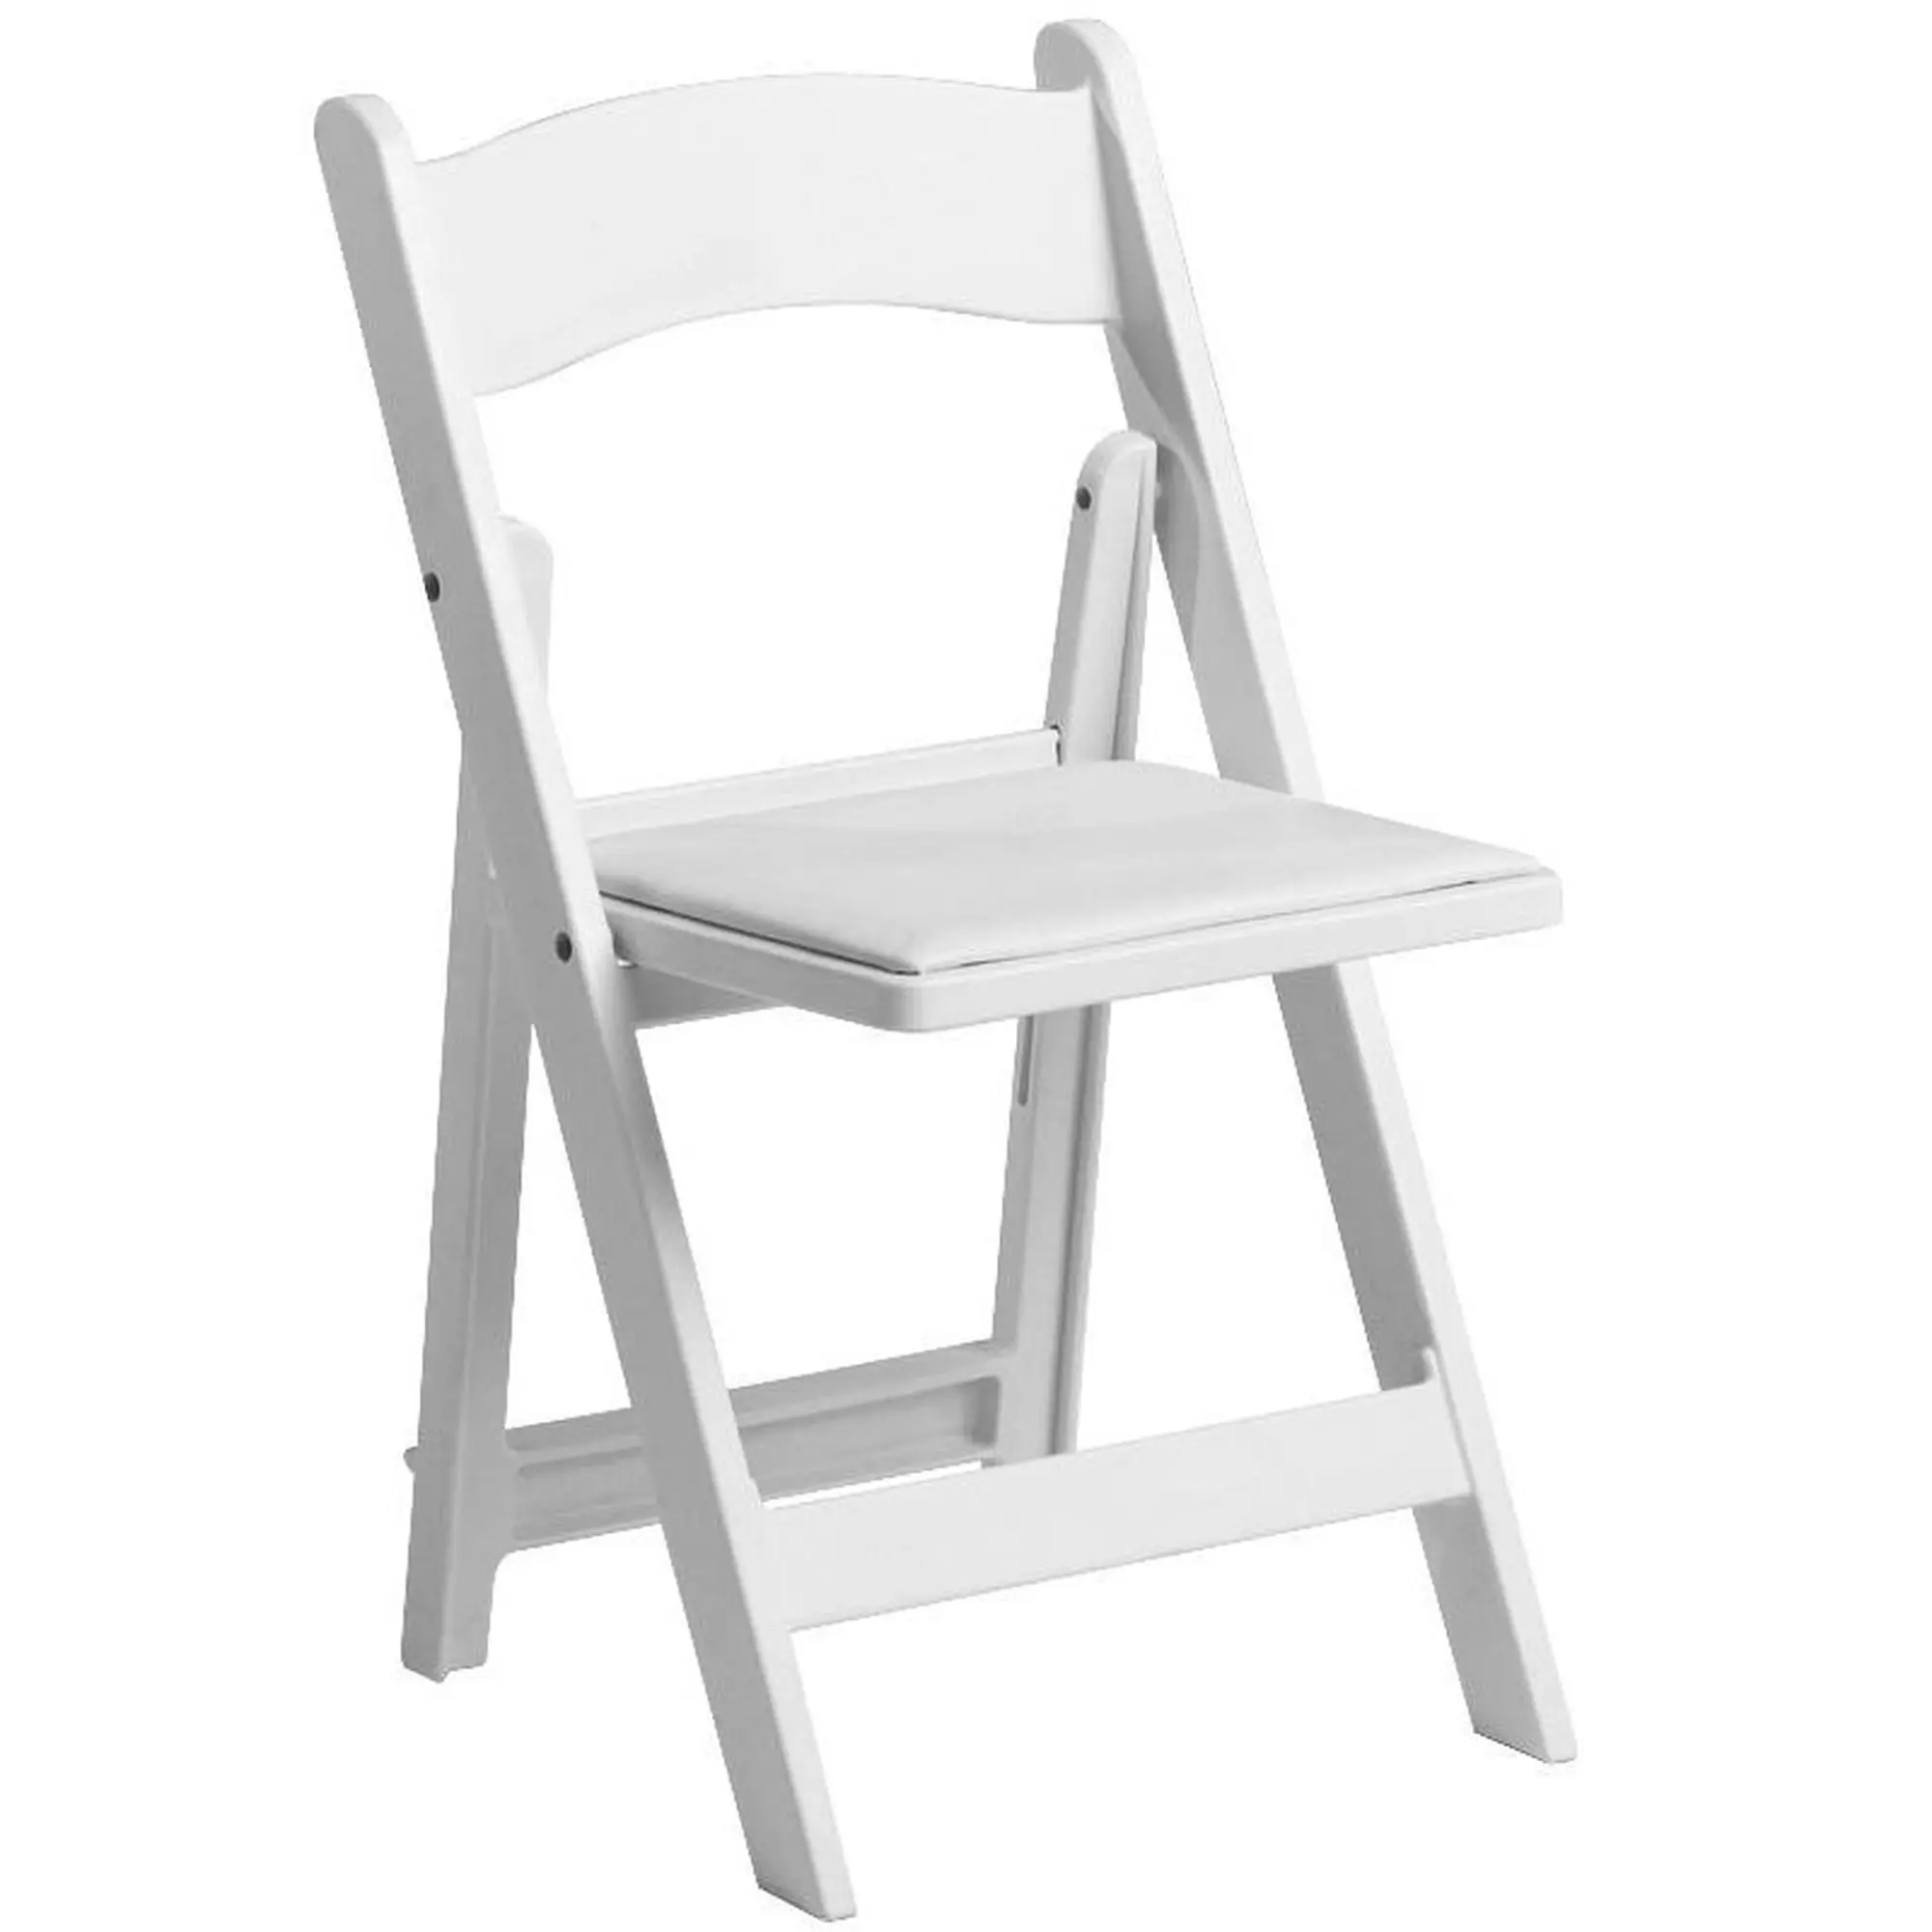 China Wholesale Cheap Wedding Garden Chairs Plastic Folding Chair Used Buy Folding Chair Used